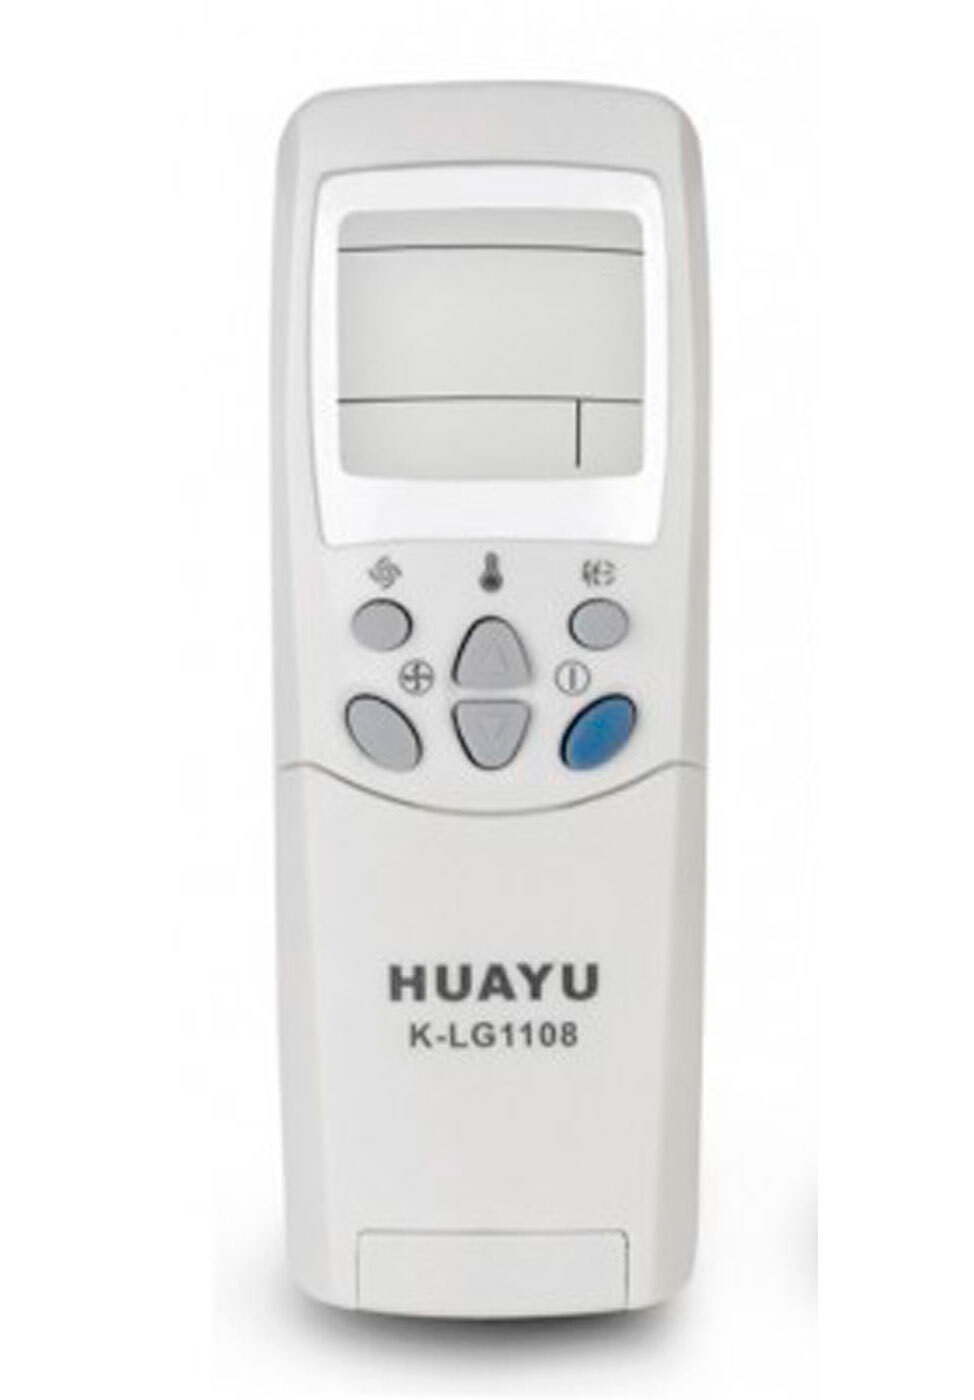 Huayu пульт кондиционер. Huayu k-lg1108 пульт для кондиционеров LG. Пульт Ду Huayu k-lg1108 для кондиционера. Пульт для кондиционера LG k09ehc. Пульт для кондиционера LG s07lhp.